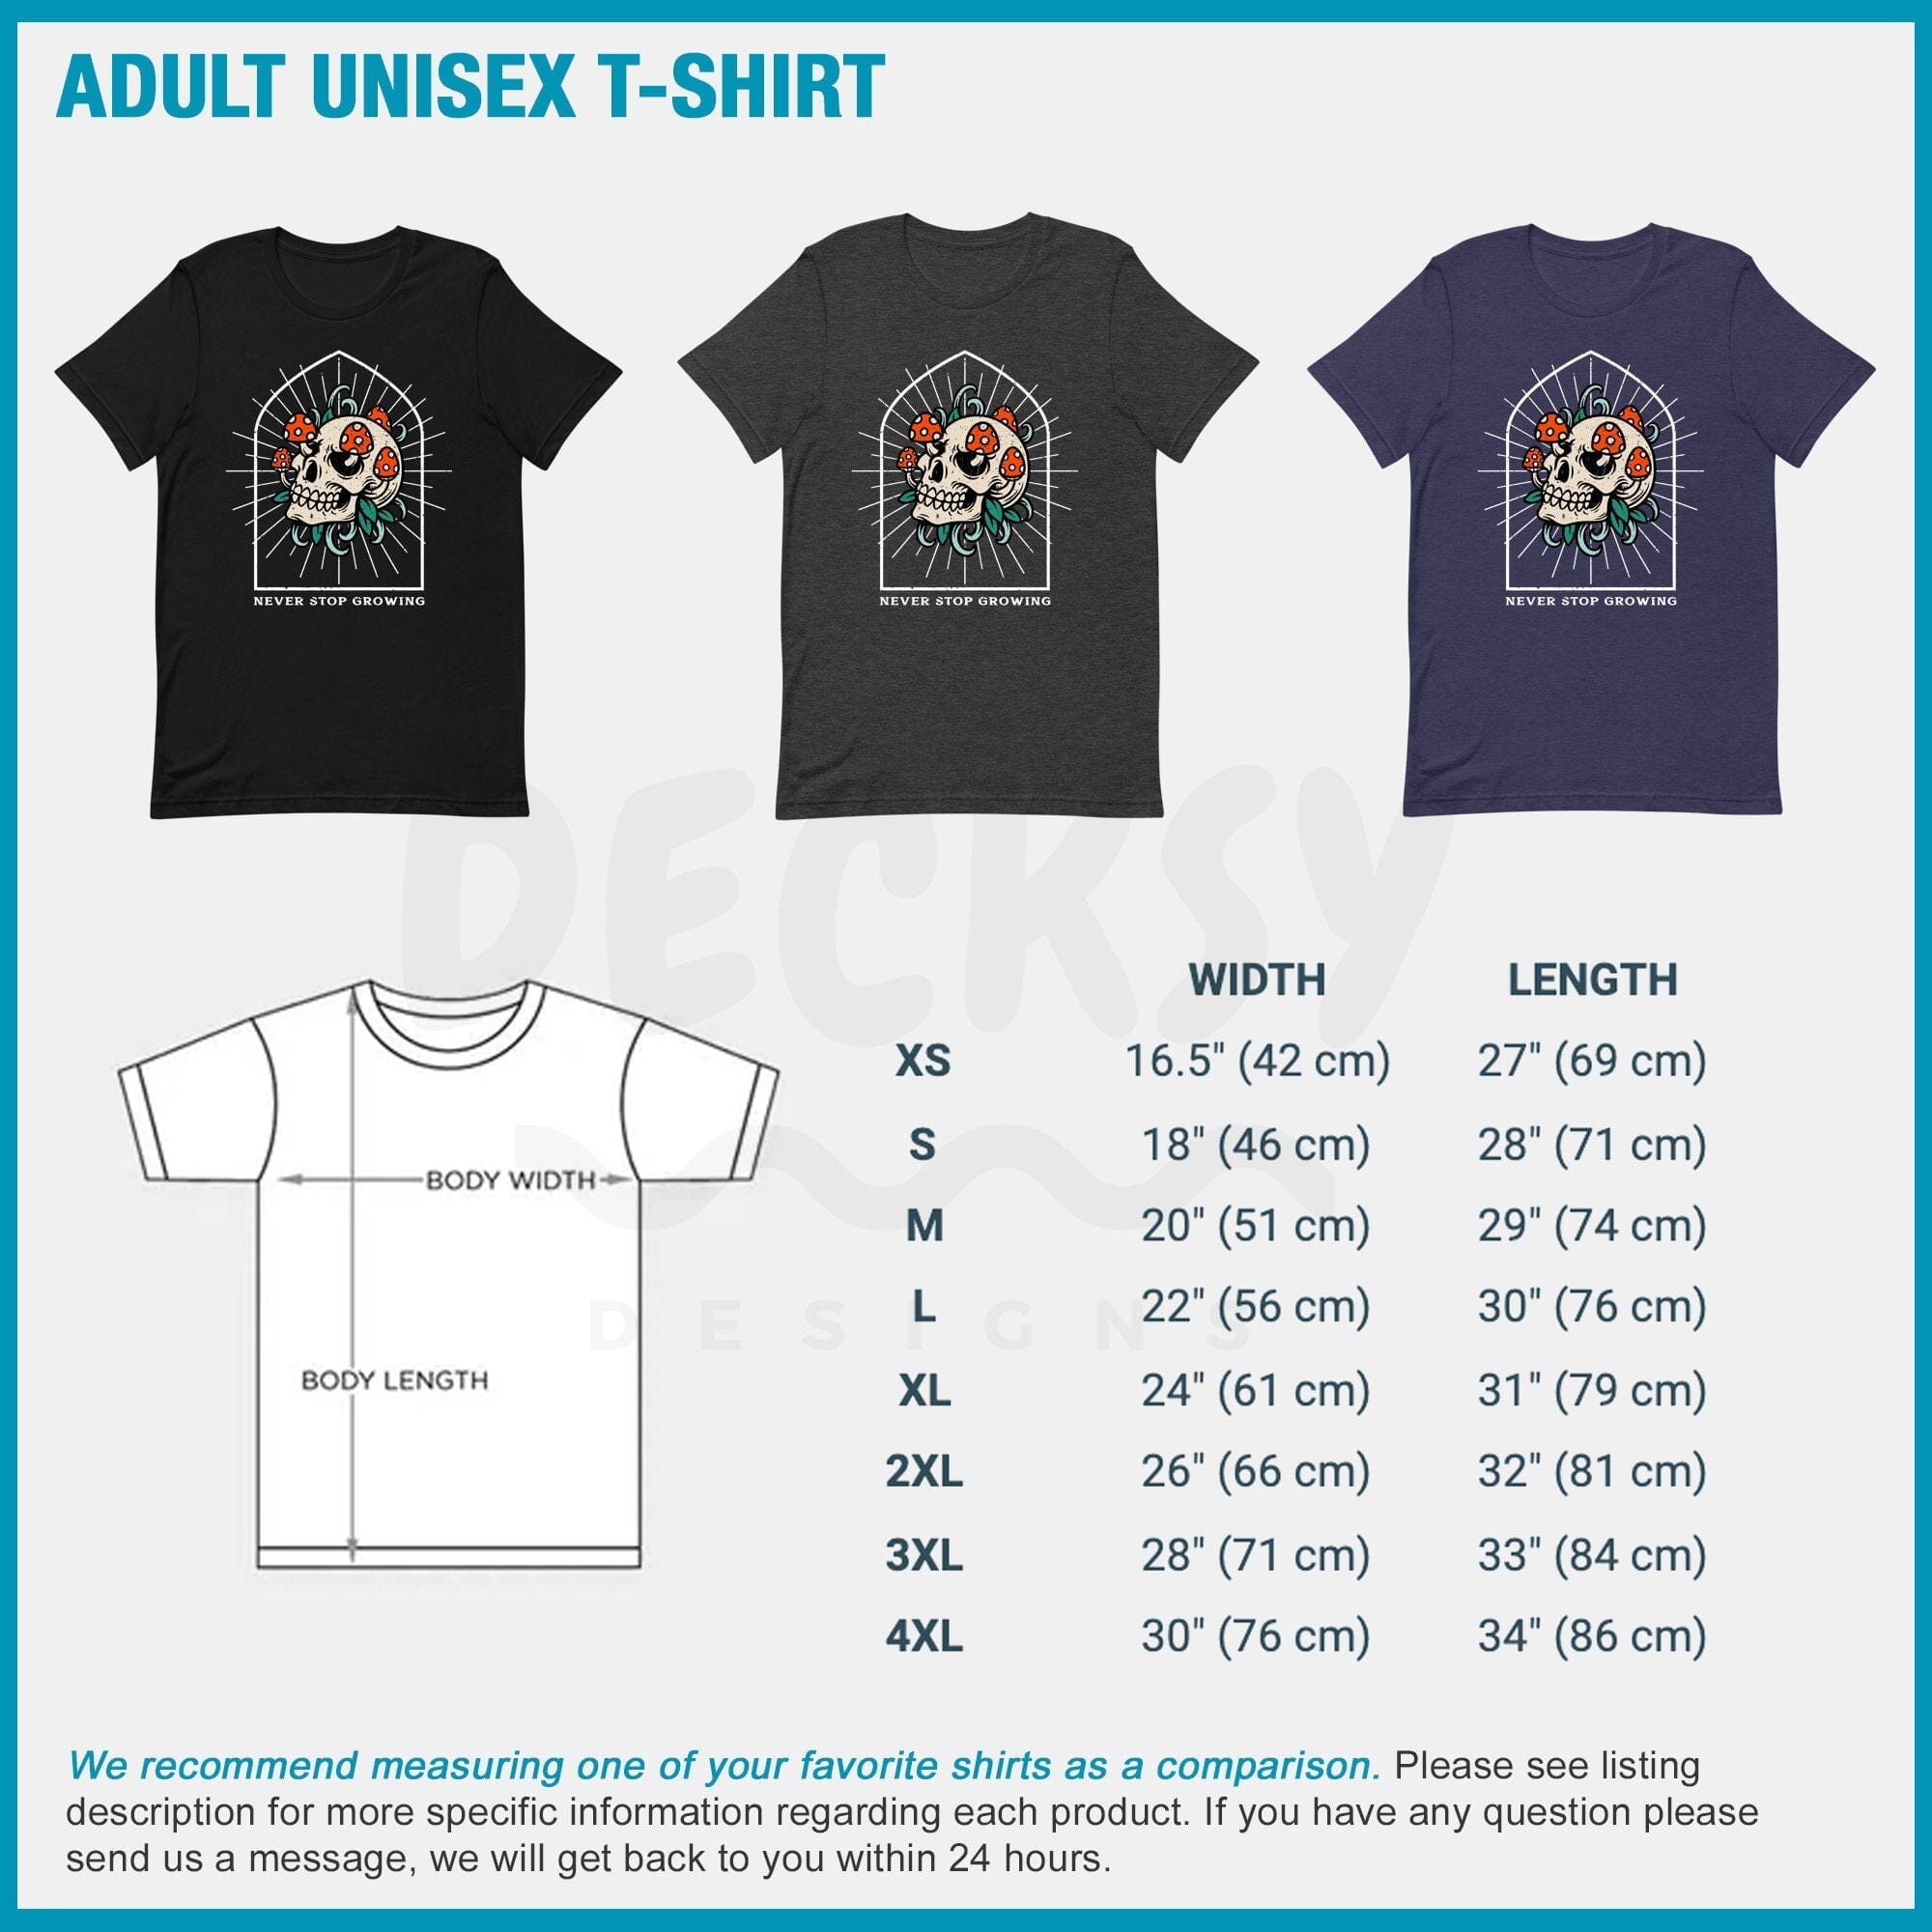 Mushroom Skull Shirt, Mycology Gift-Clothing:Gender-Neutral Adult Clothing:Tops & Tees:T-shirts:Graphic Tees-DecksyDesigns